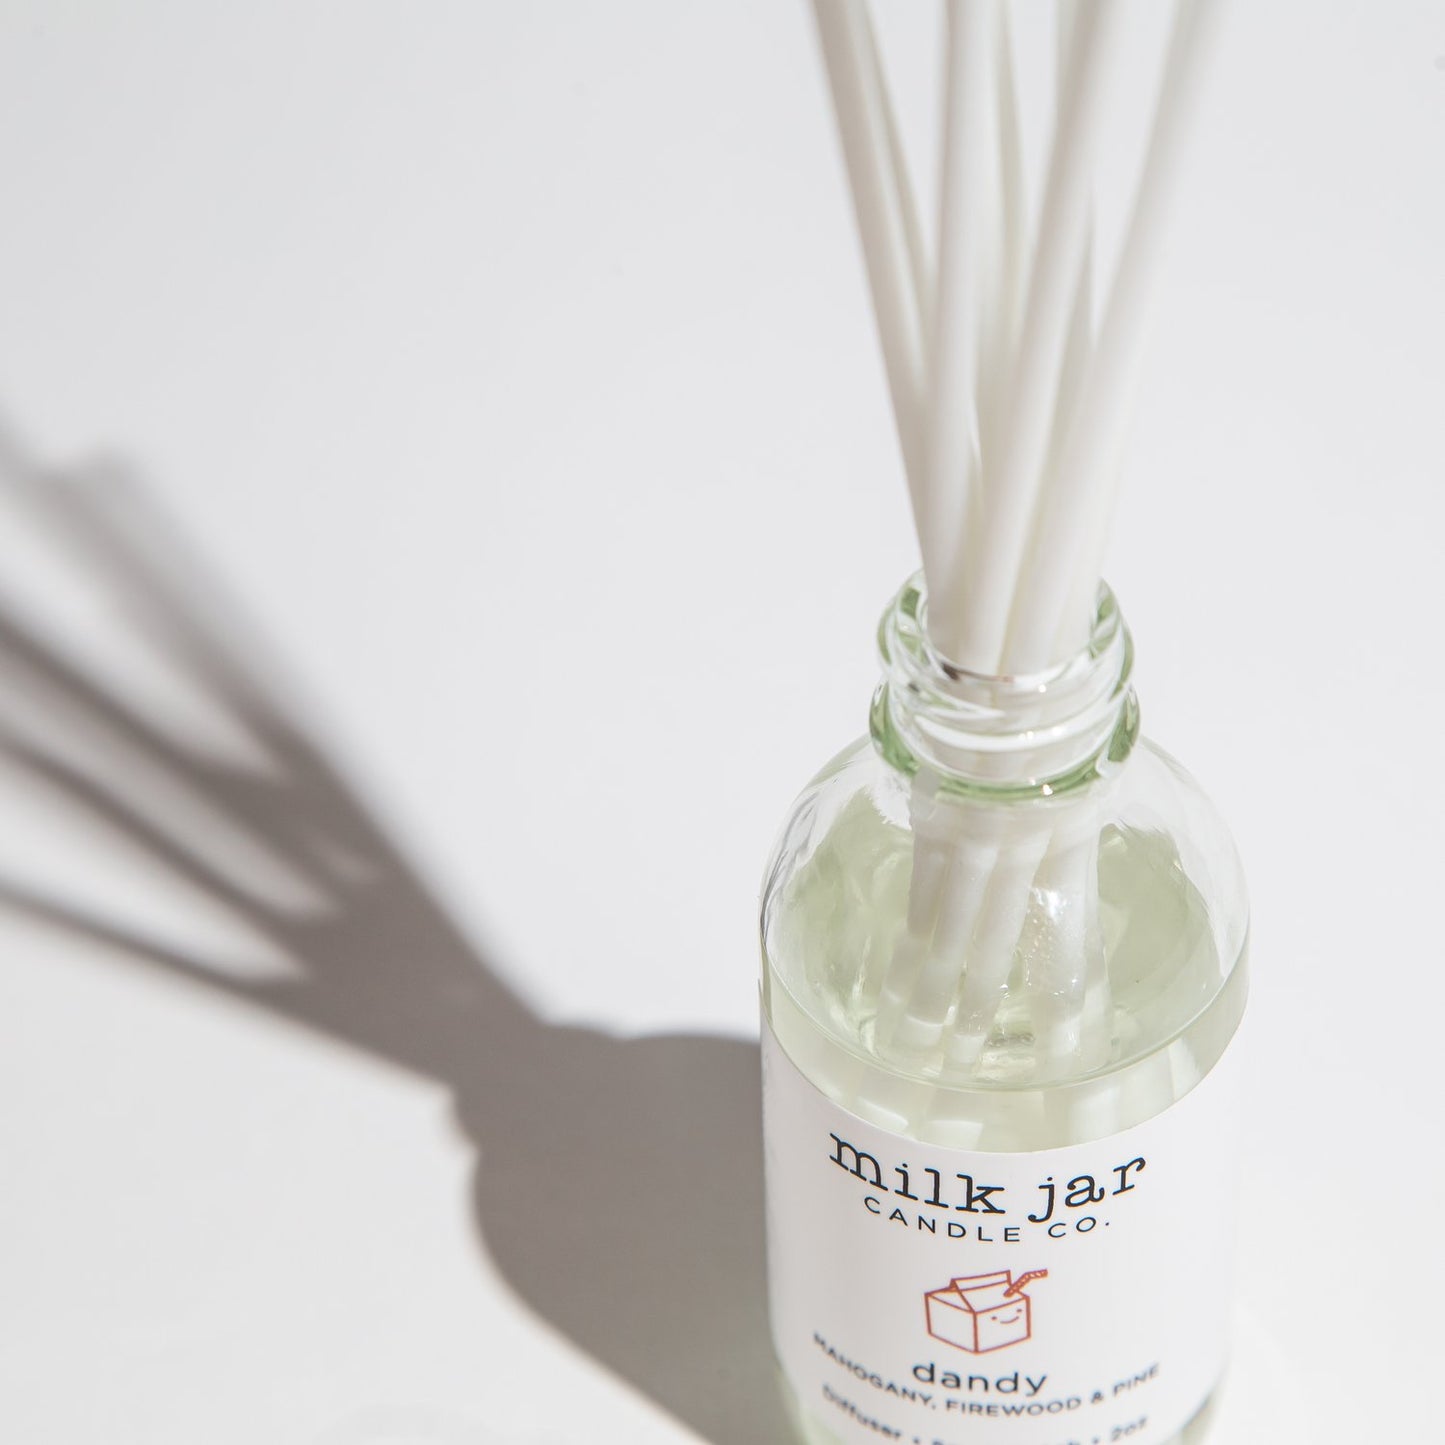 Milk Jar Candle Co / Dandy Diffuser